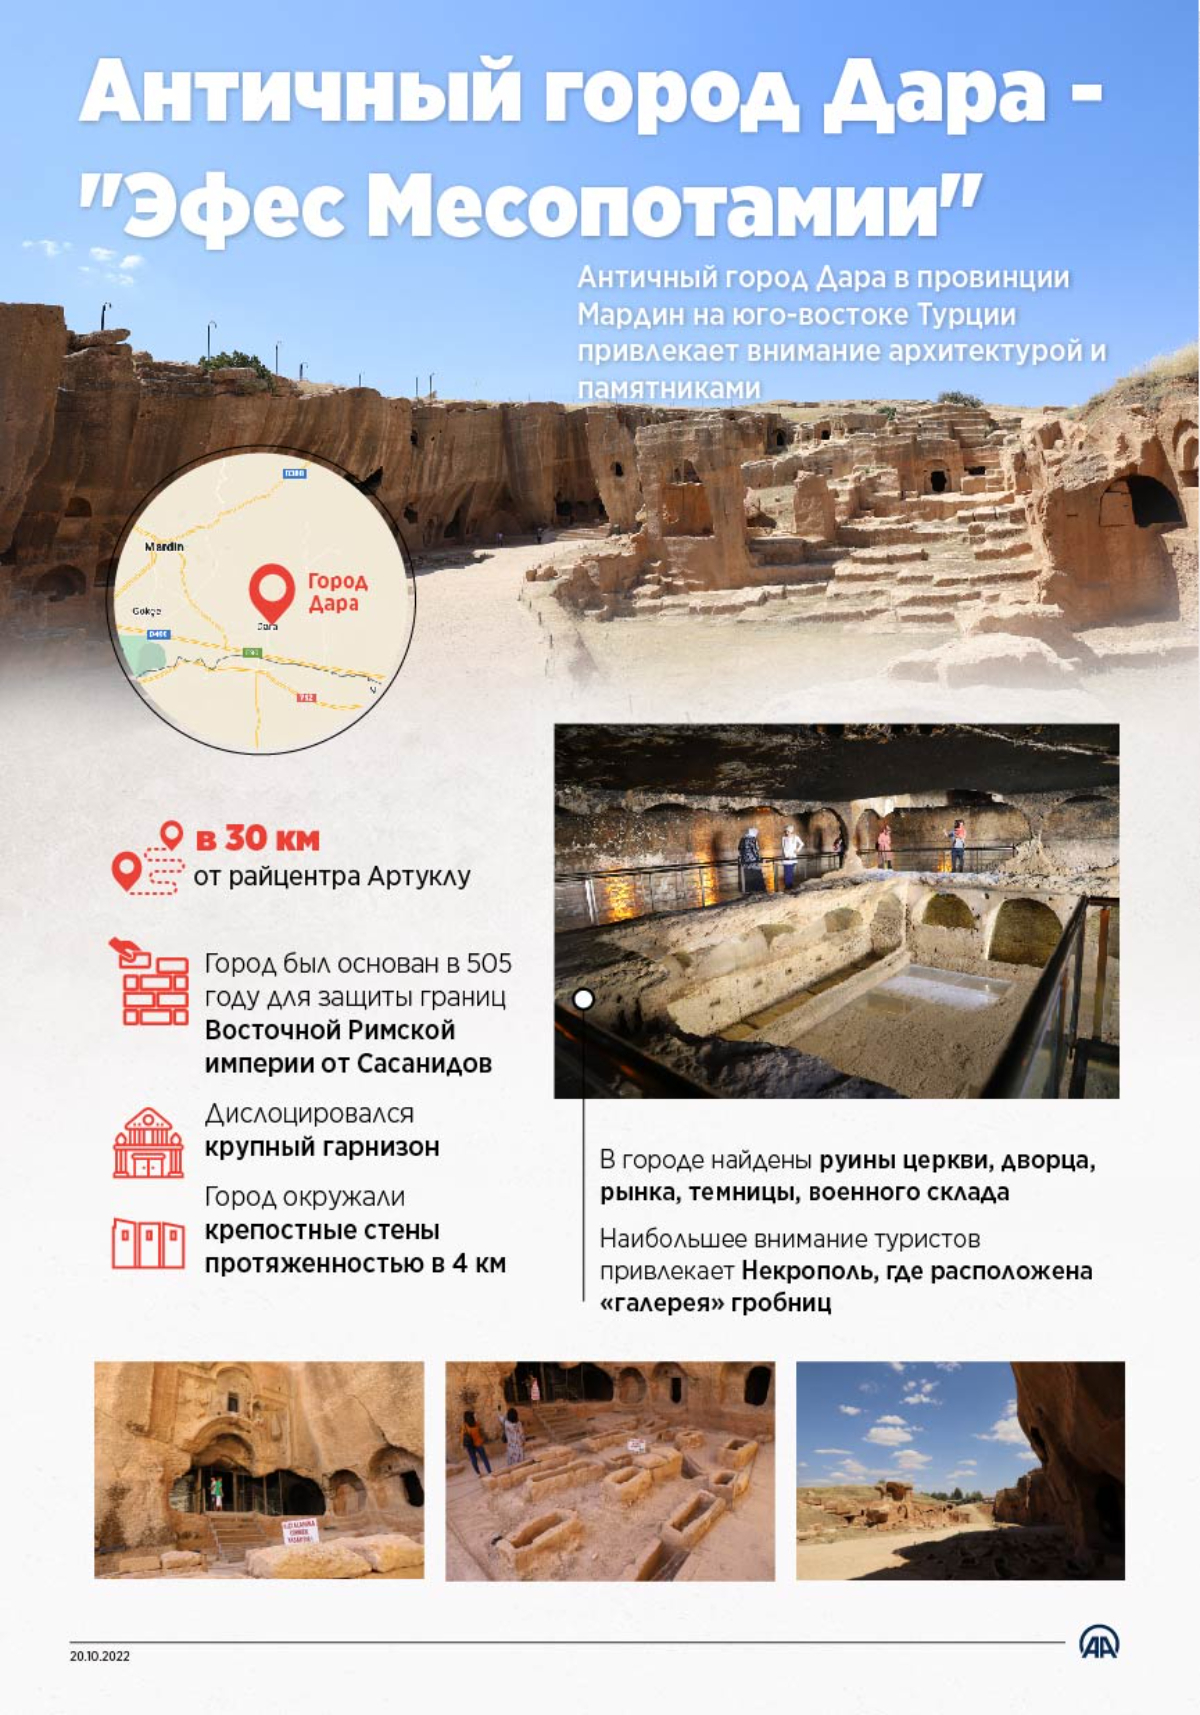 Античный город Дара - "Эфес Месопотамии"